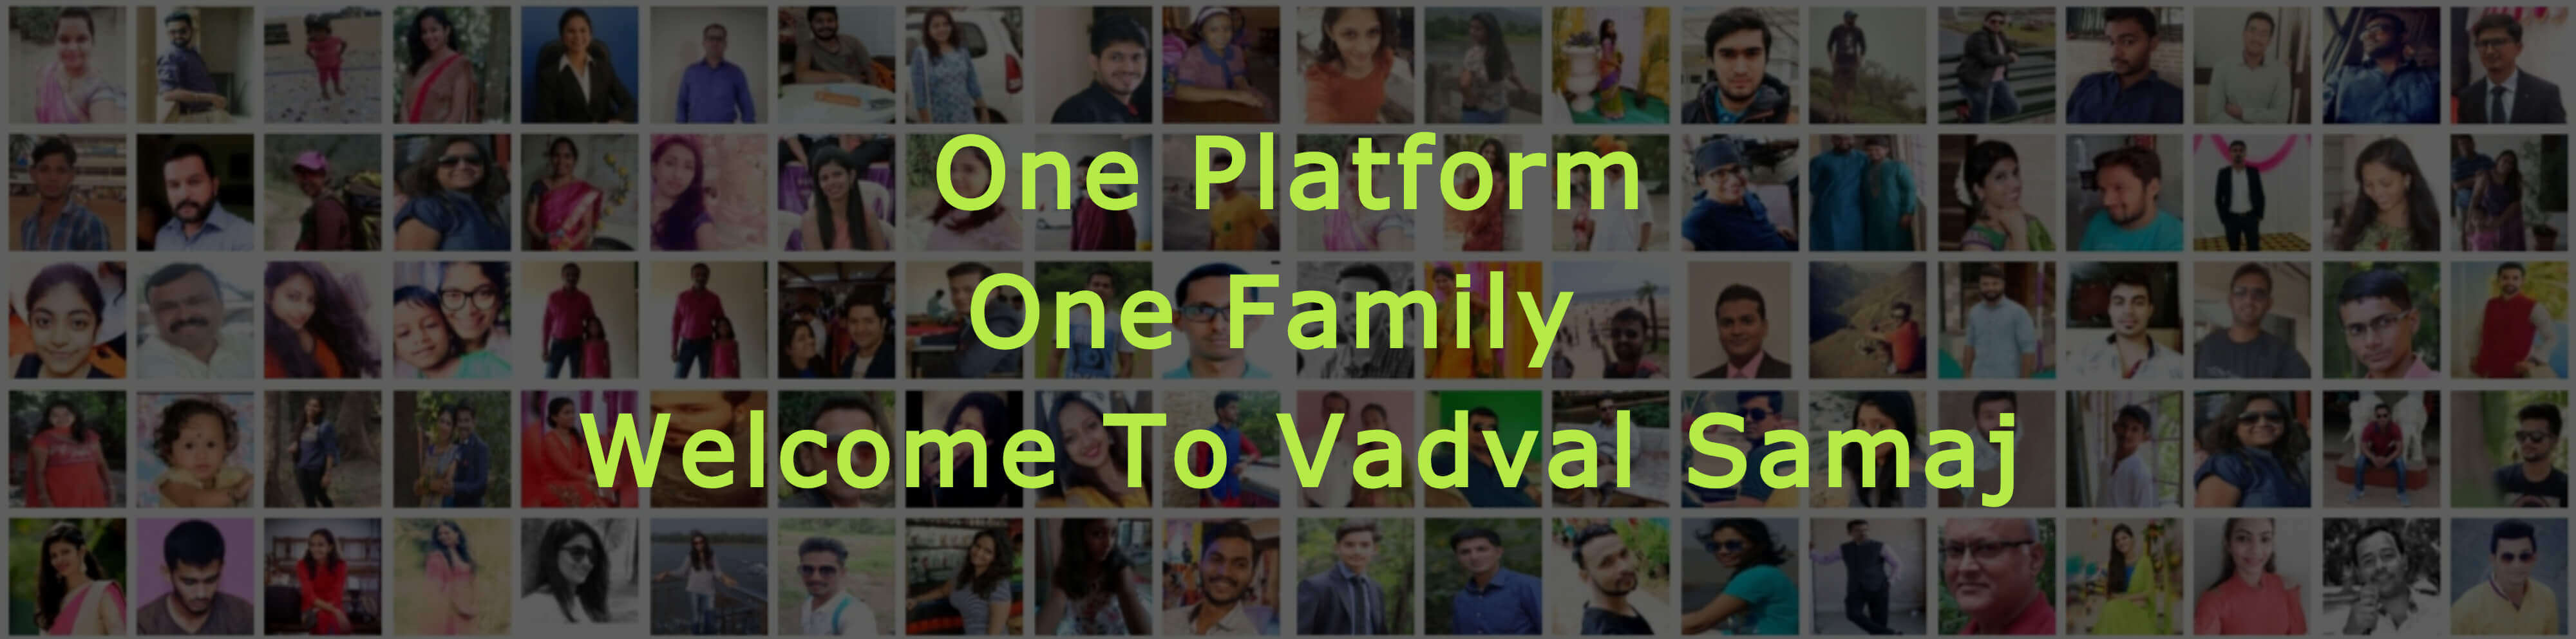 Vadval Samaj - one family